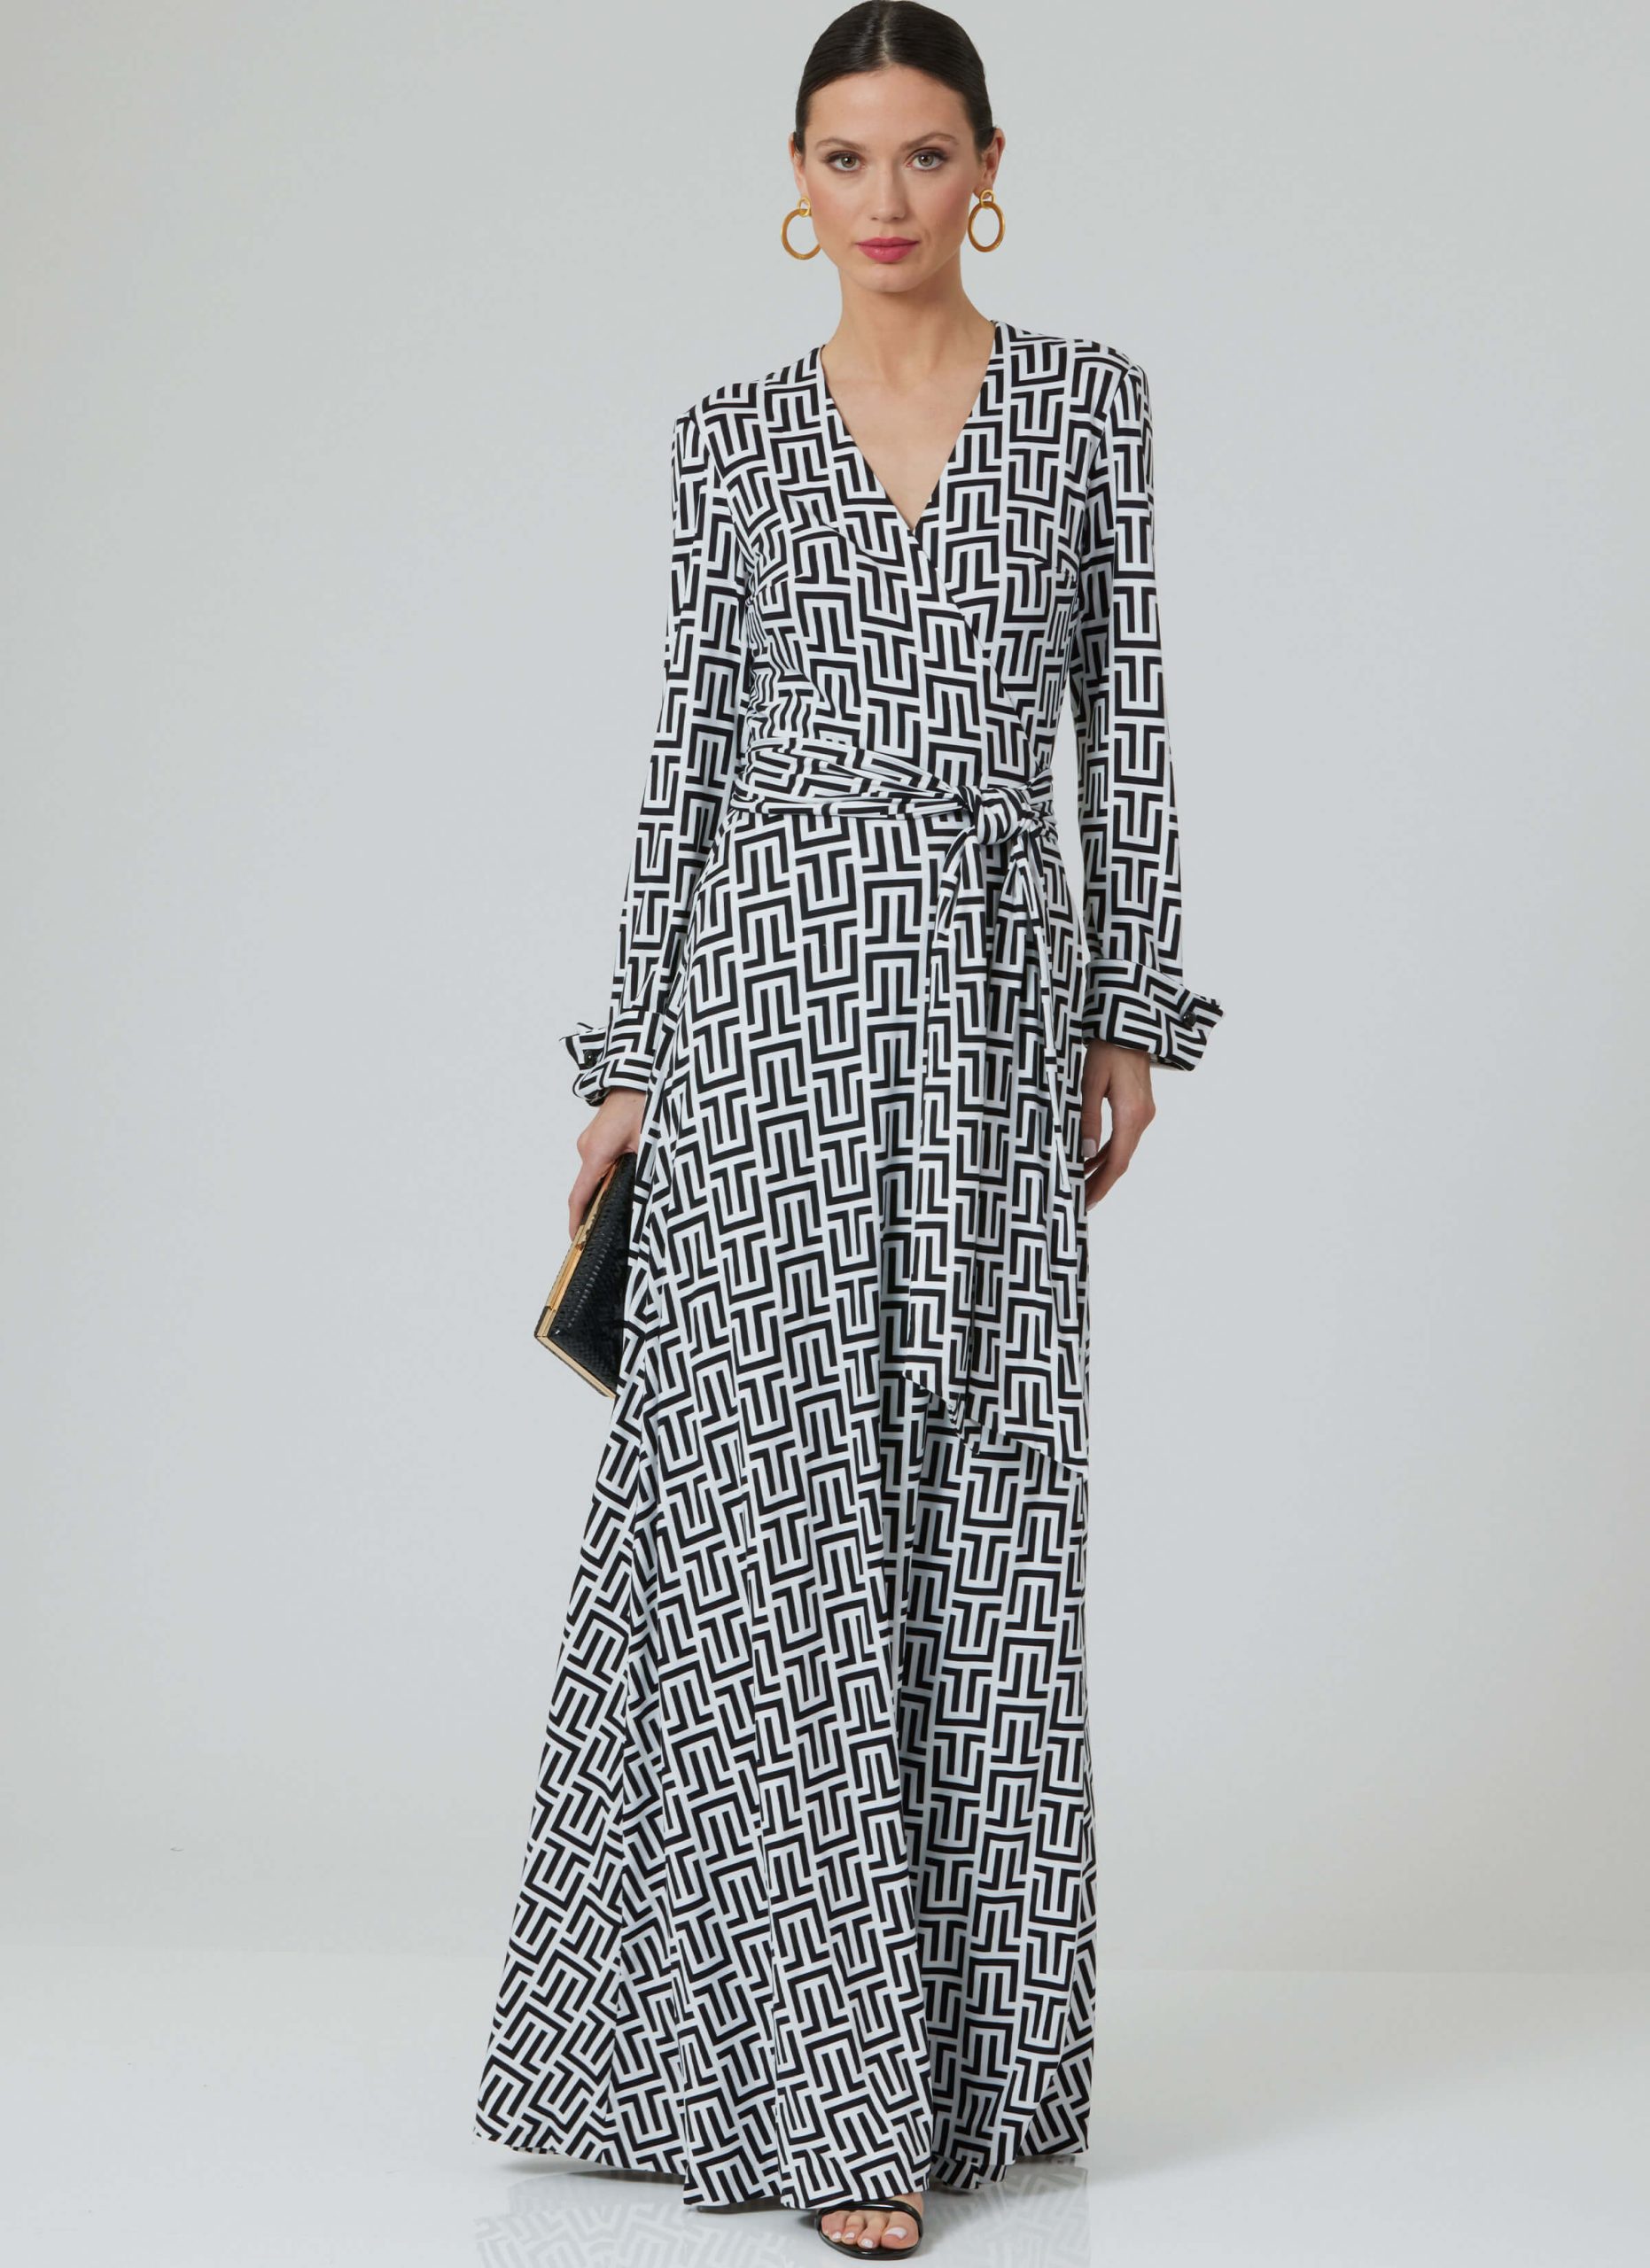 Vogue Patterns V2000 Misses' DVF Wrap Dress by Diane von Furstenberg